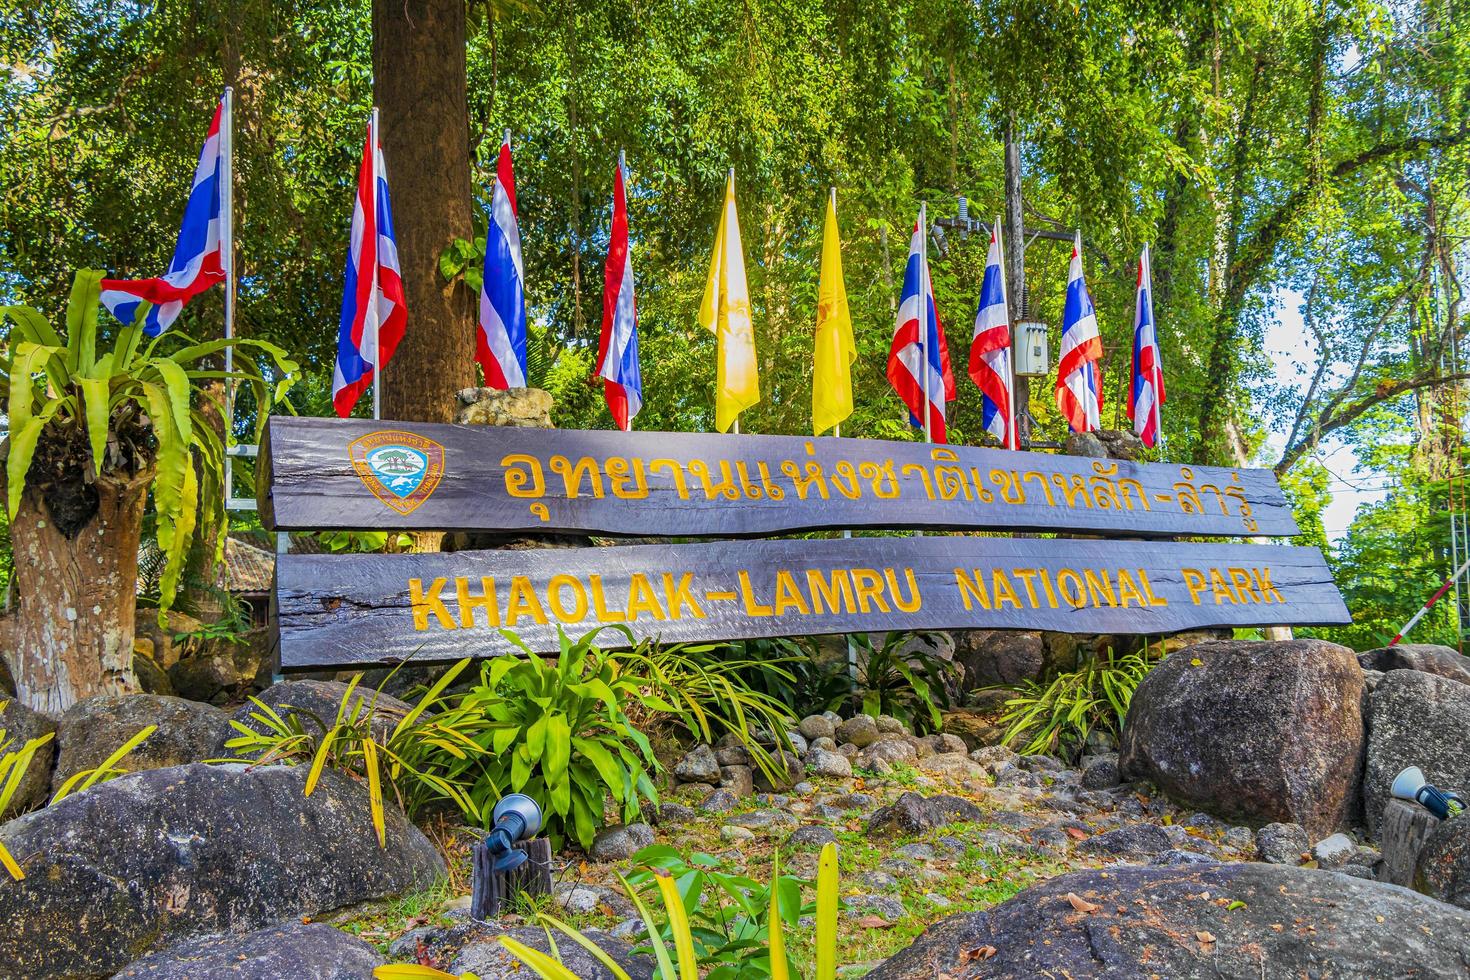 phang-nga thailandia 09. febbraio 2018 benvenuto schede d'ingresso lamru nationalpark khao lak phang-nga thailandia. foto